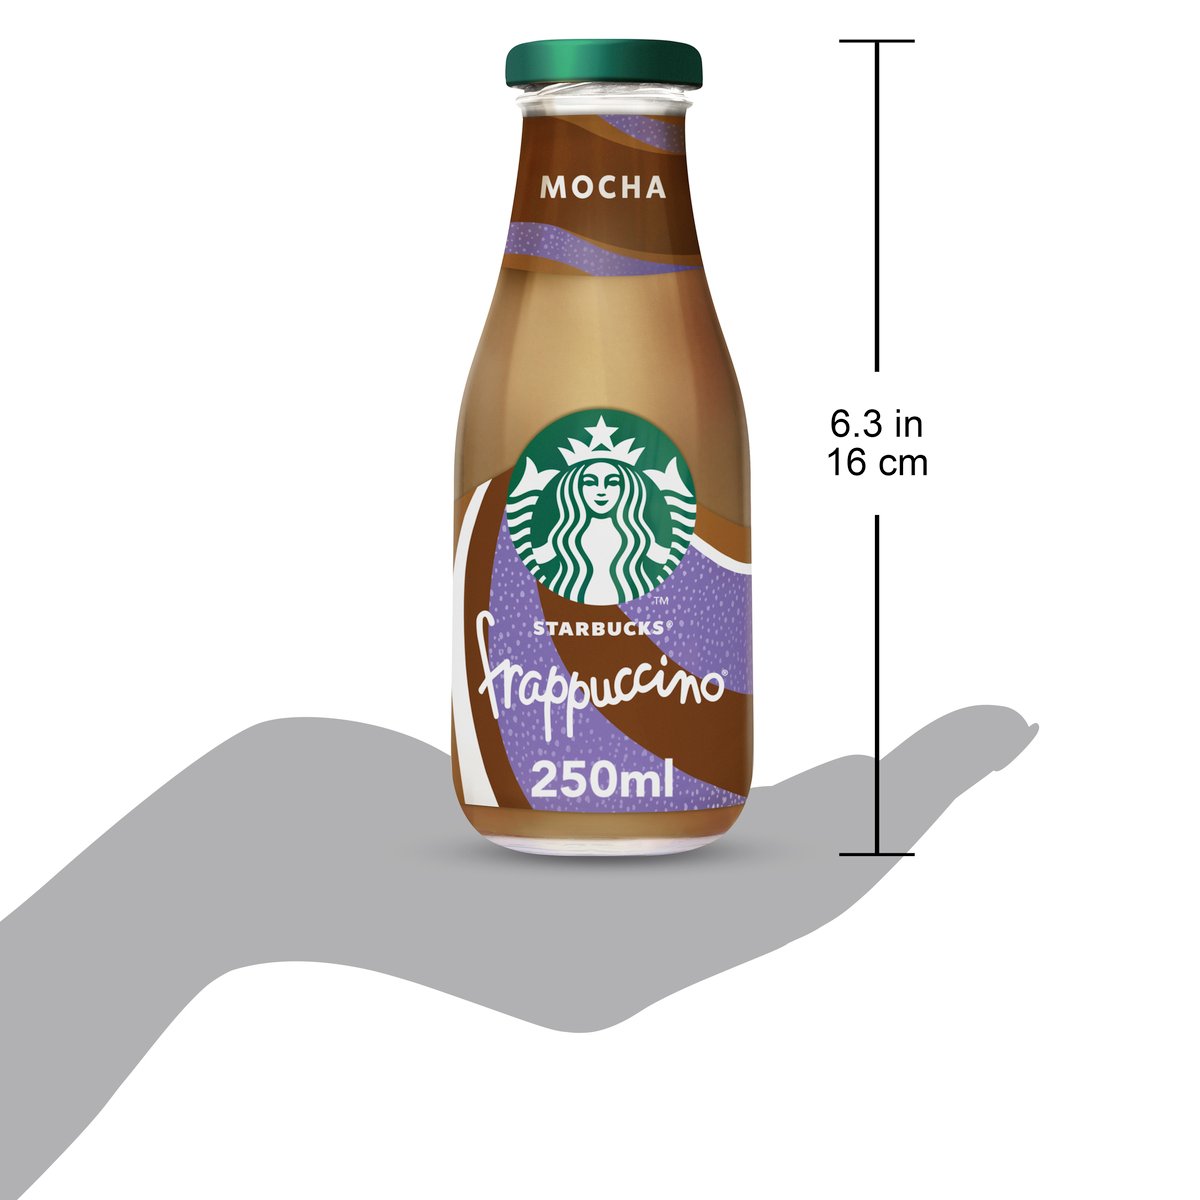 Starbucks Frappuccino Mocha Chocolate Coffee Drink 250 ml